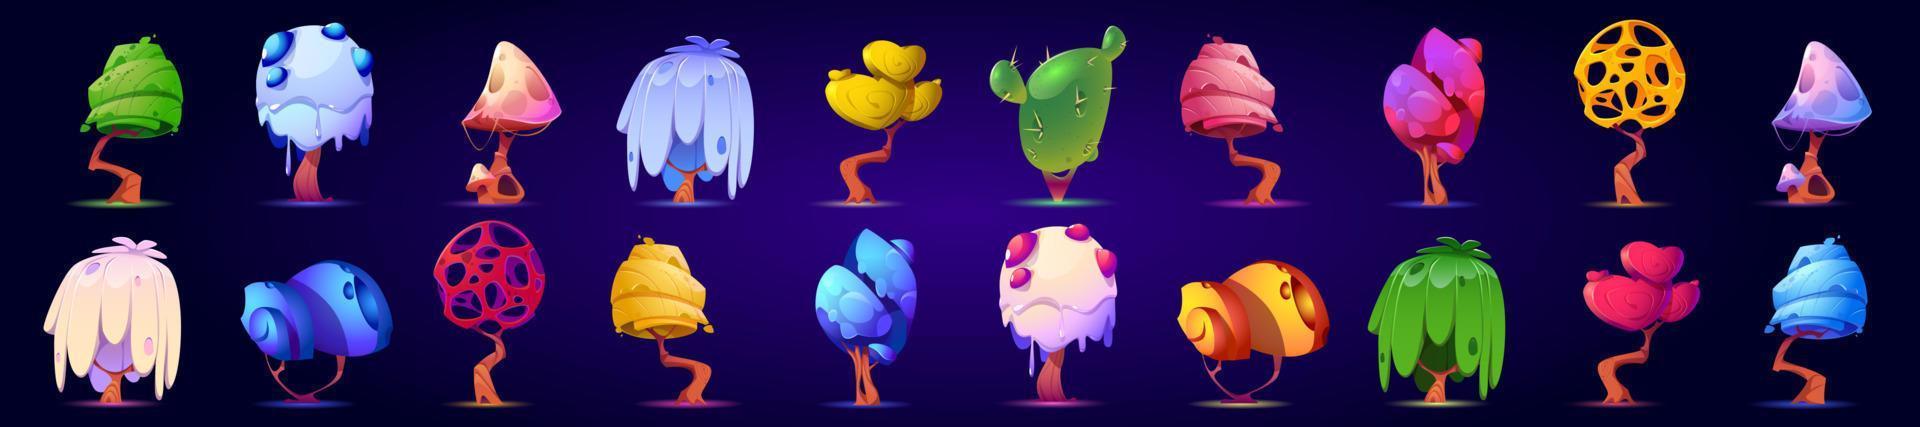 Fantasy mushrooms or alien trees, elements set vector